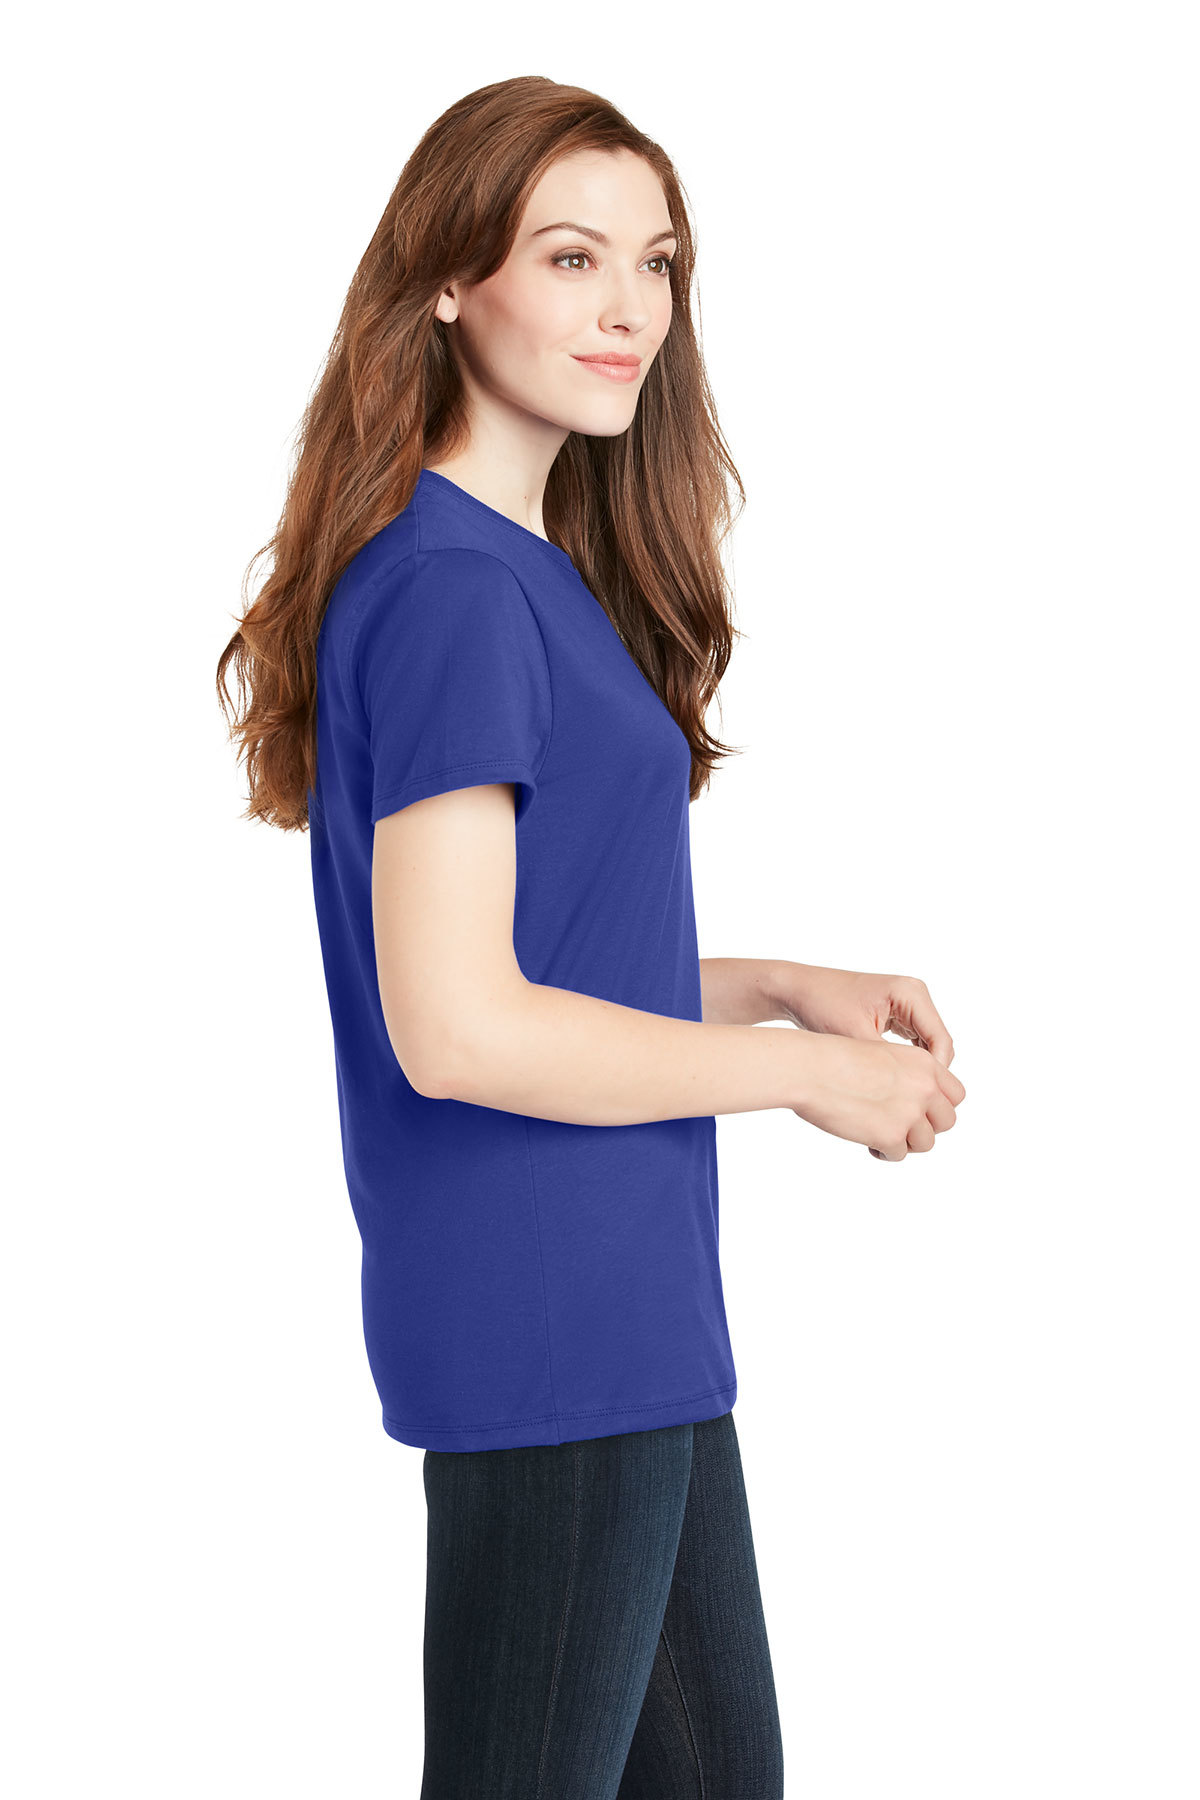 Hanes - Ladies Perfect-T Cotton T-Shirt | Product | SanMar